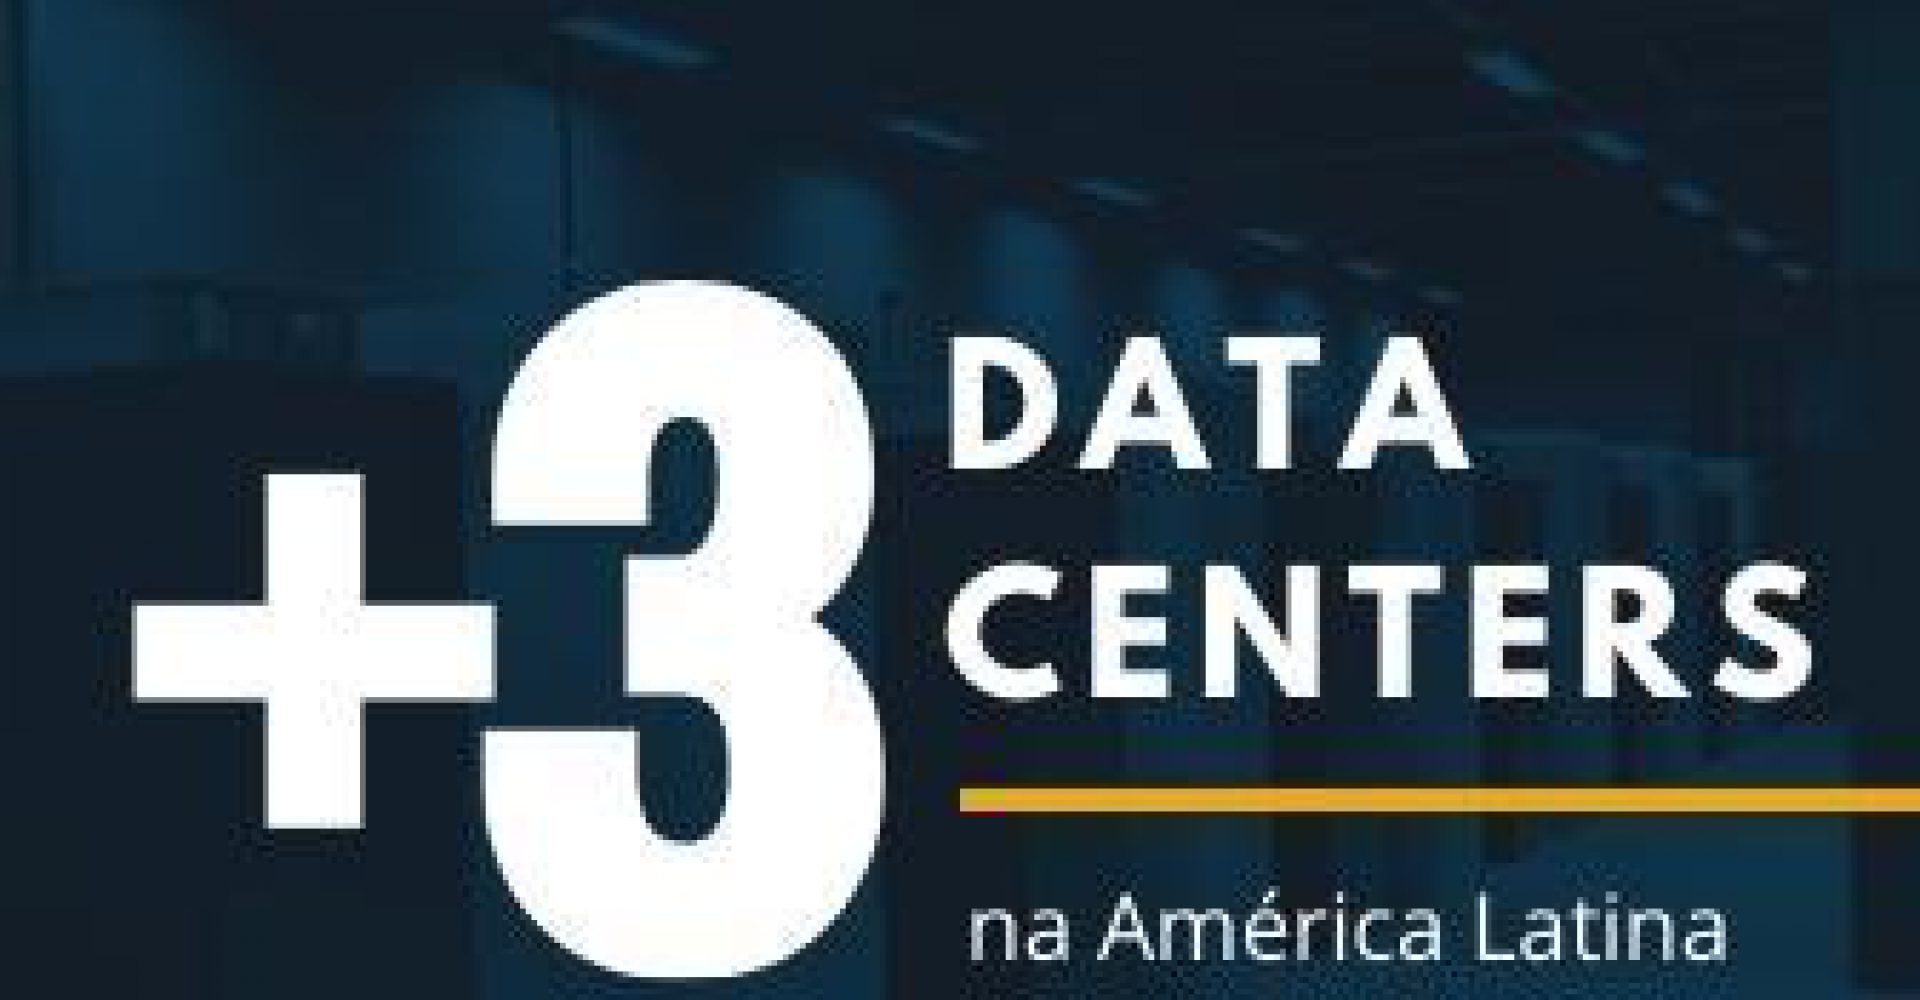 Ascenty announces three new data centers in Latin America